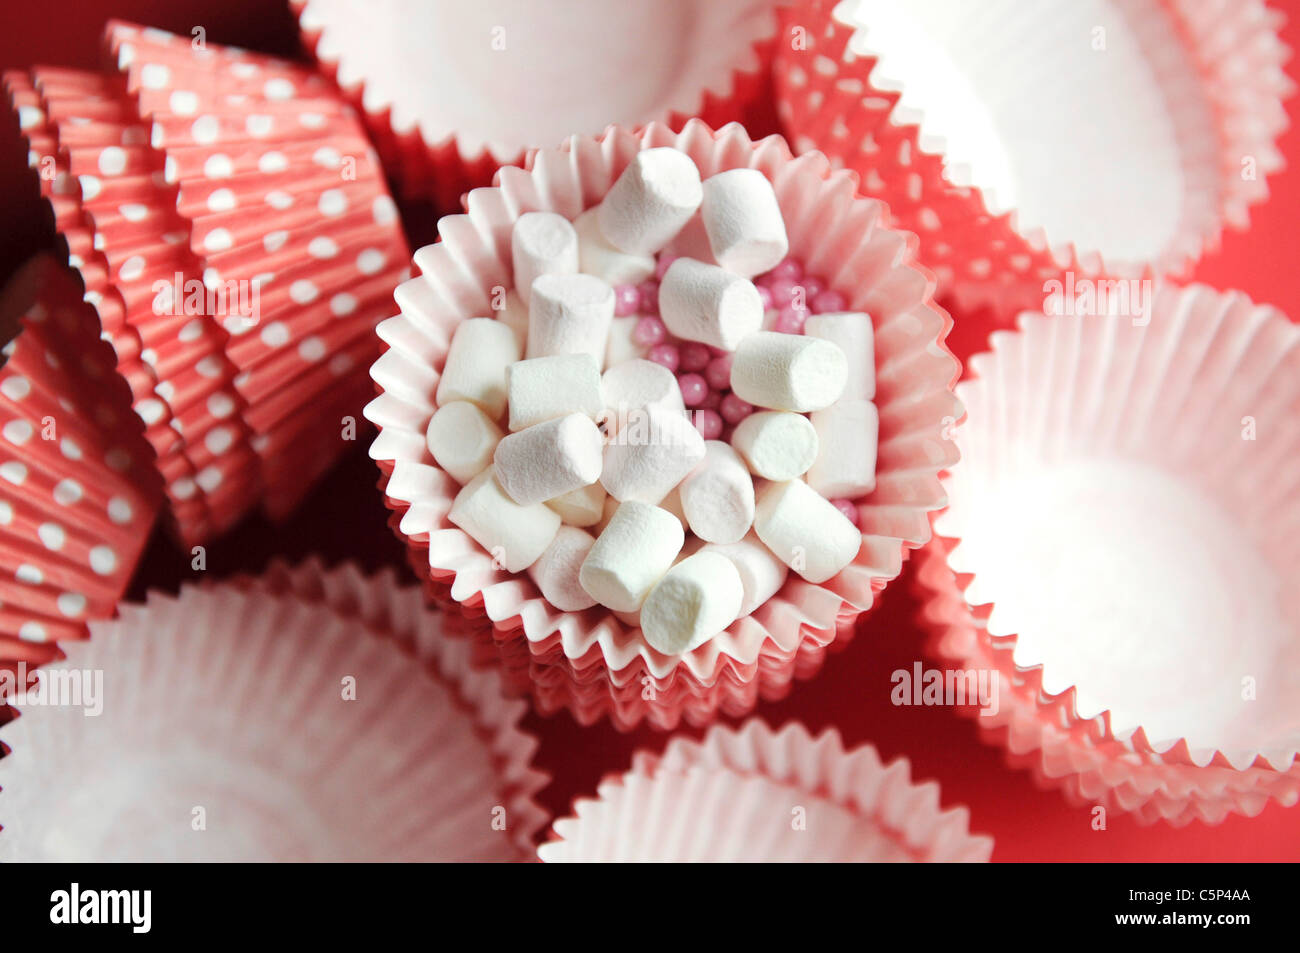 Rosa Muffin-Fällen mit weißen Punkten und Mini marshmallows Stockfoto